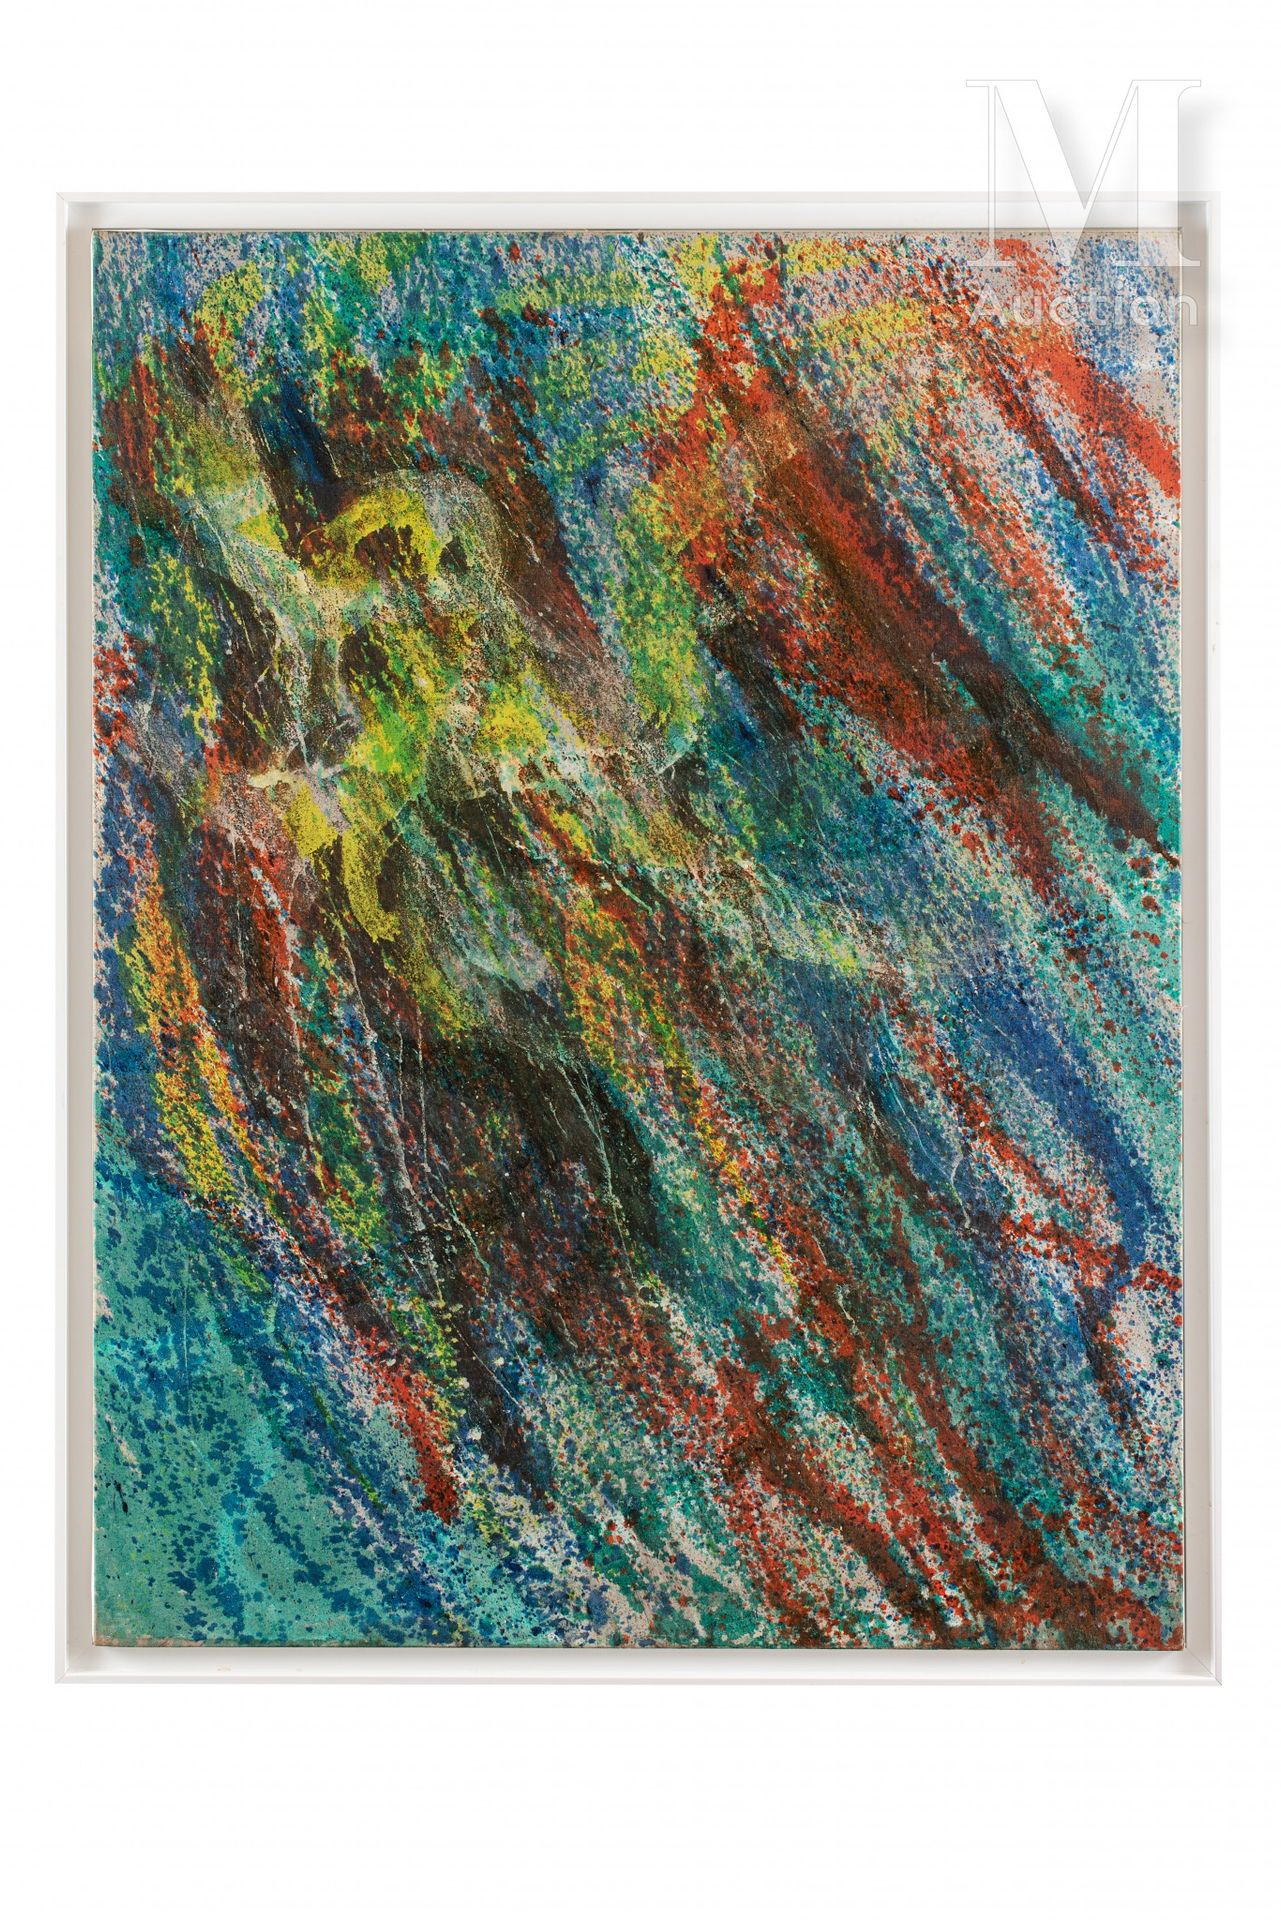 Stanley William HAYTER (1901-1988) 章鱼》，1963年

布面油画

116 x 89 cm



出处 :

私人收藏，巴黎&hellip;